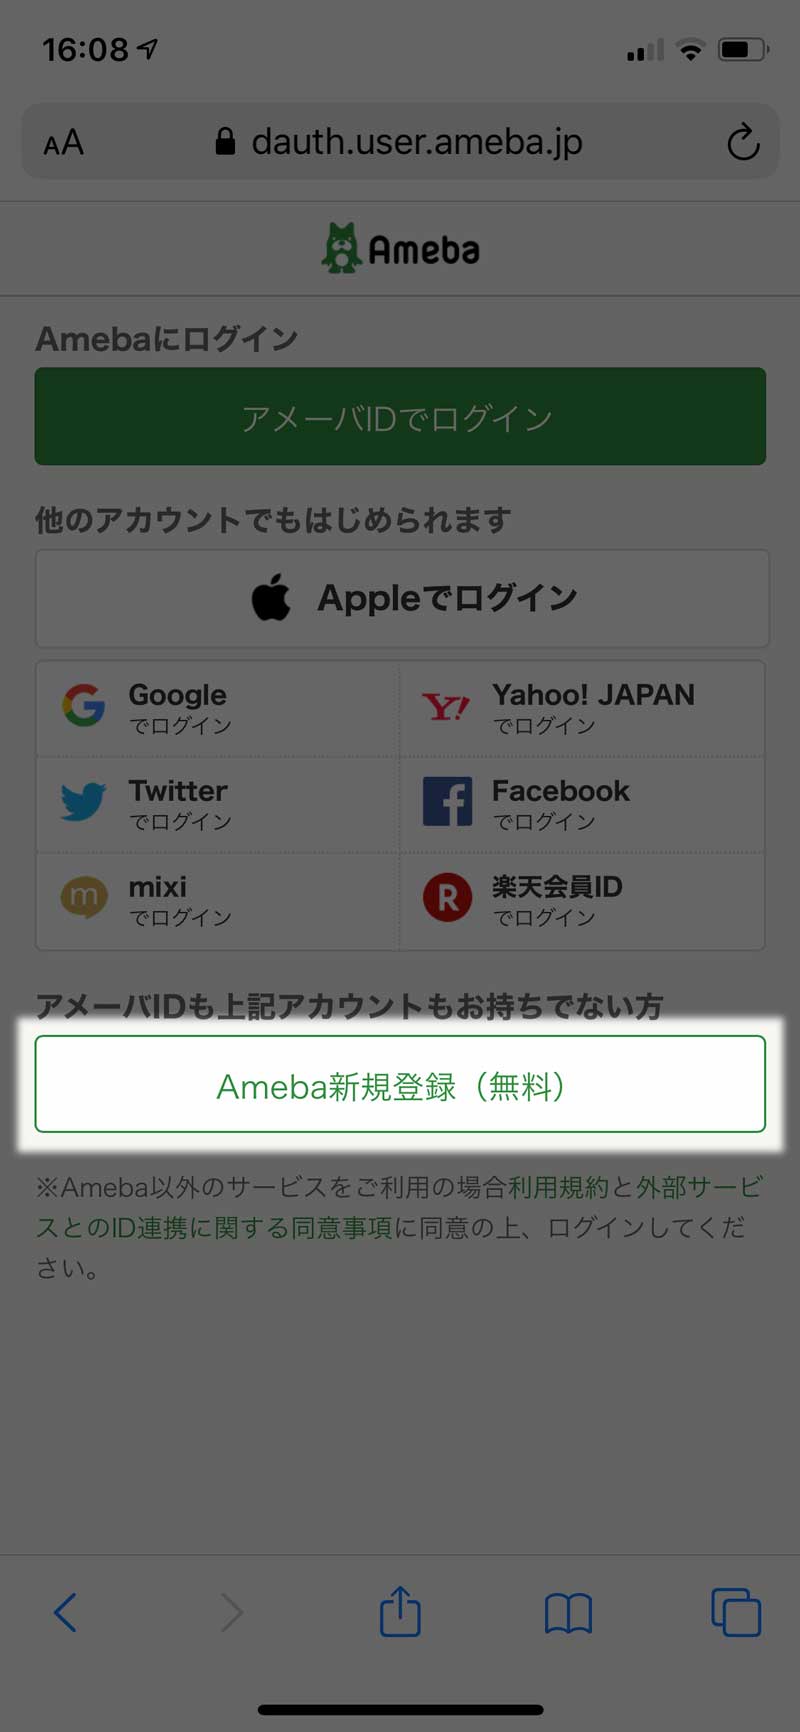 「Ameba新規登録（無料）」を押す